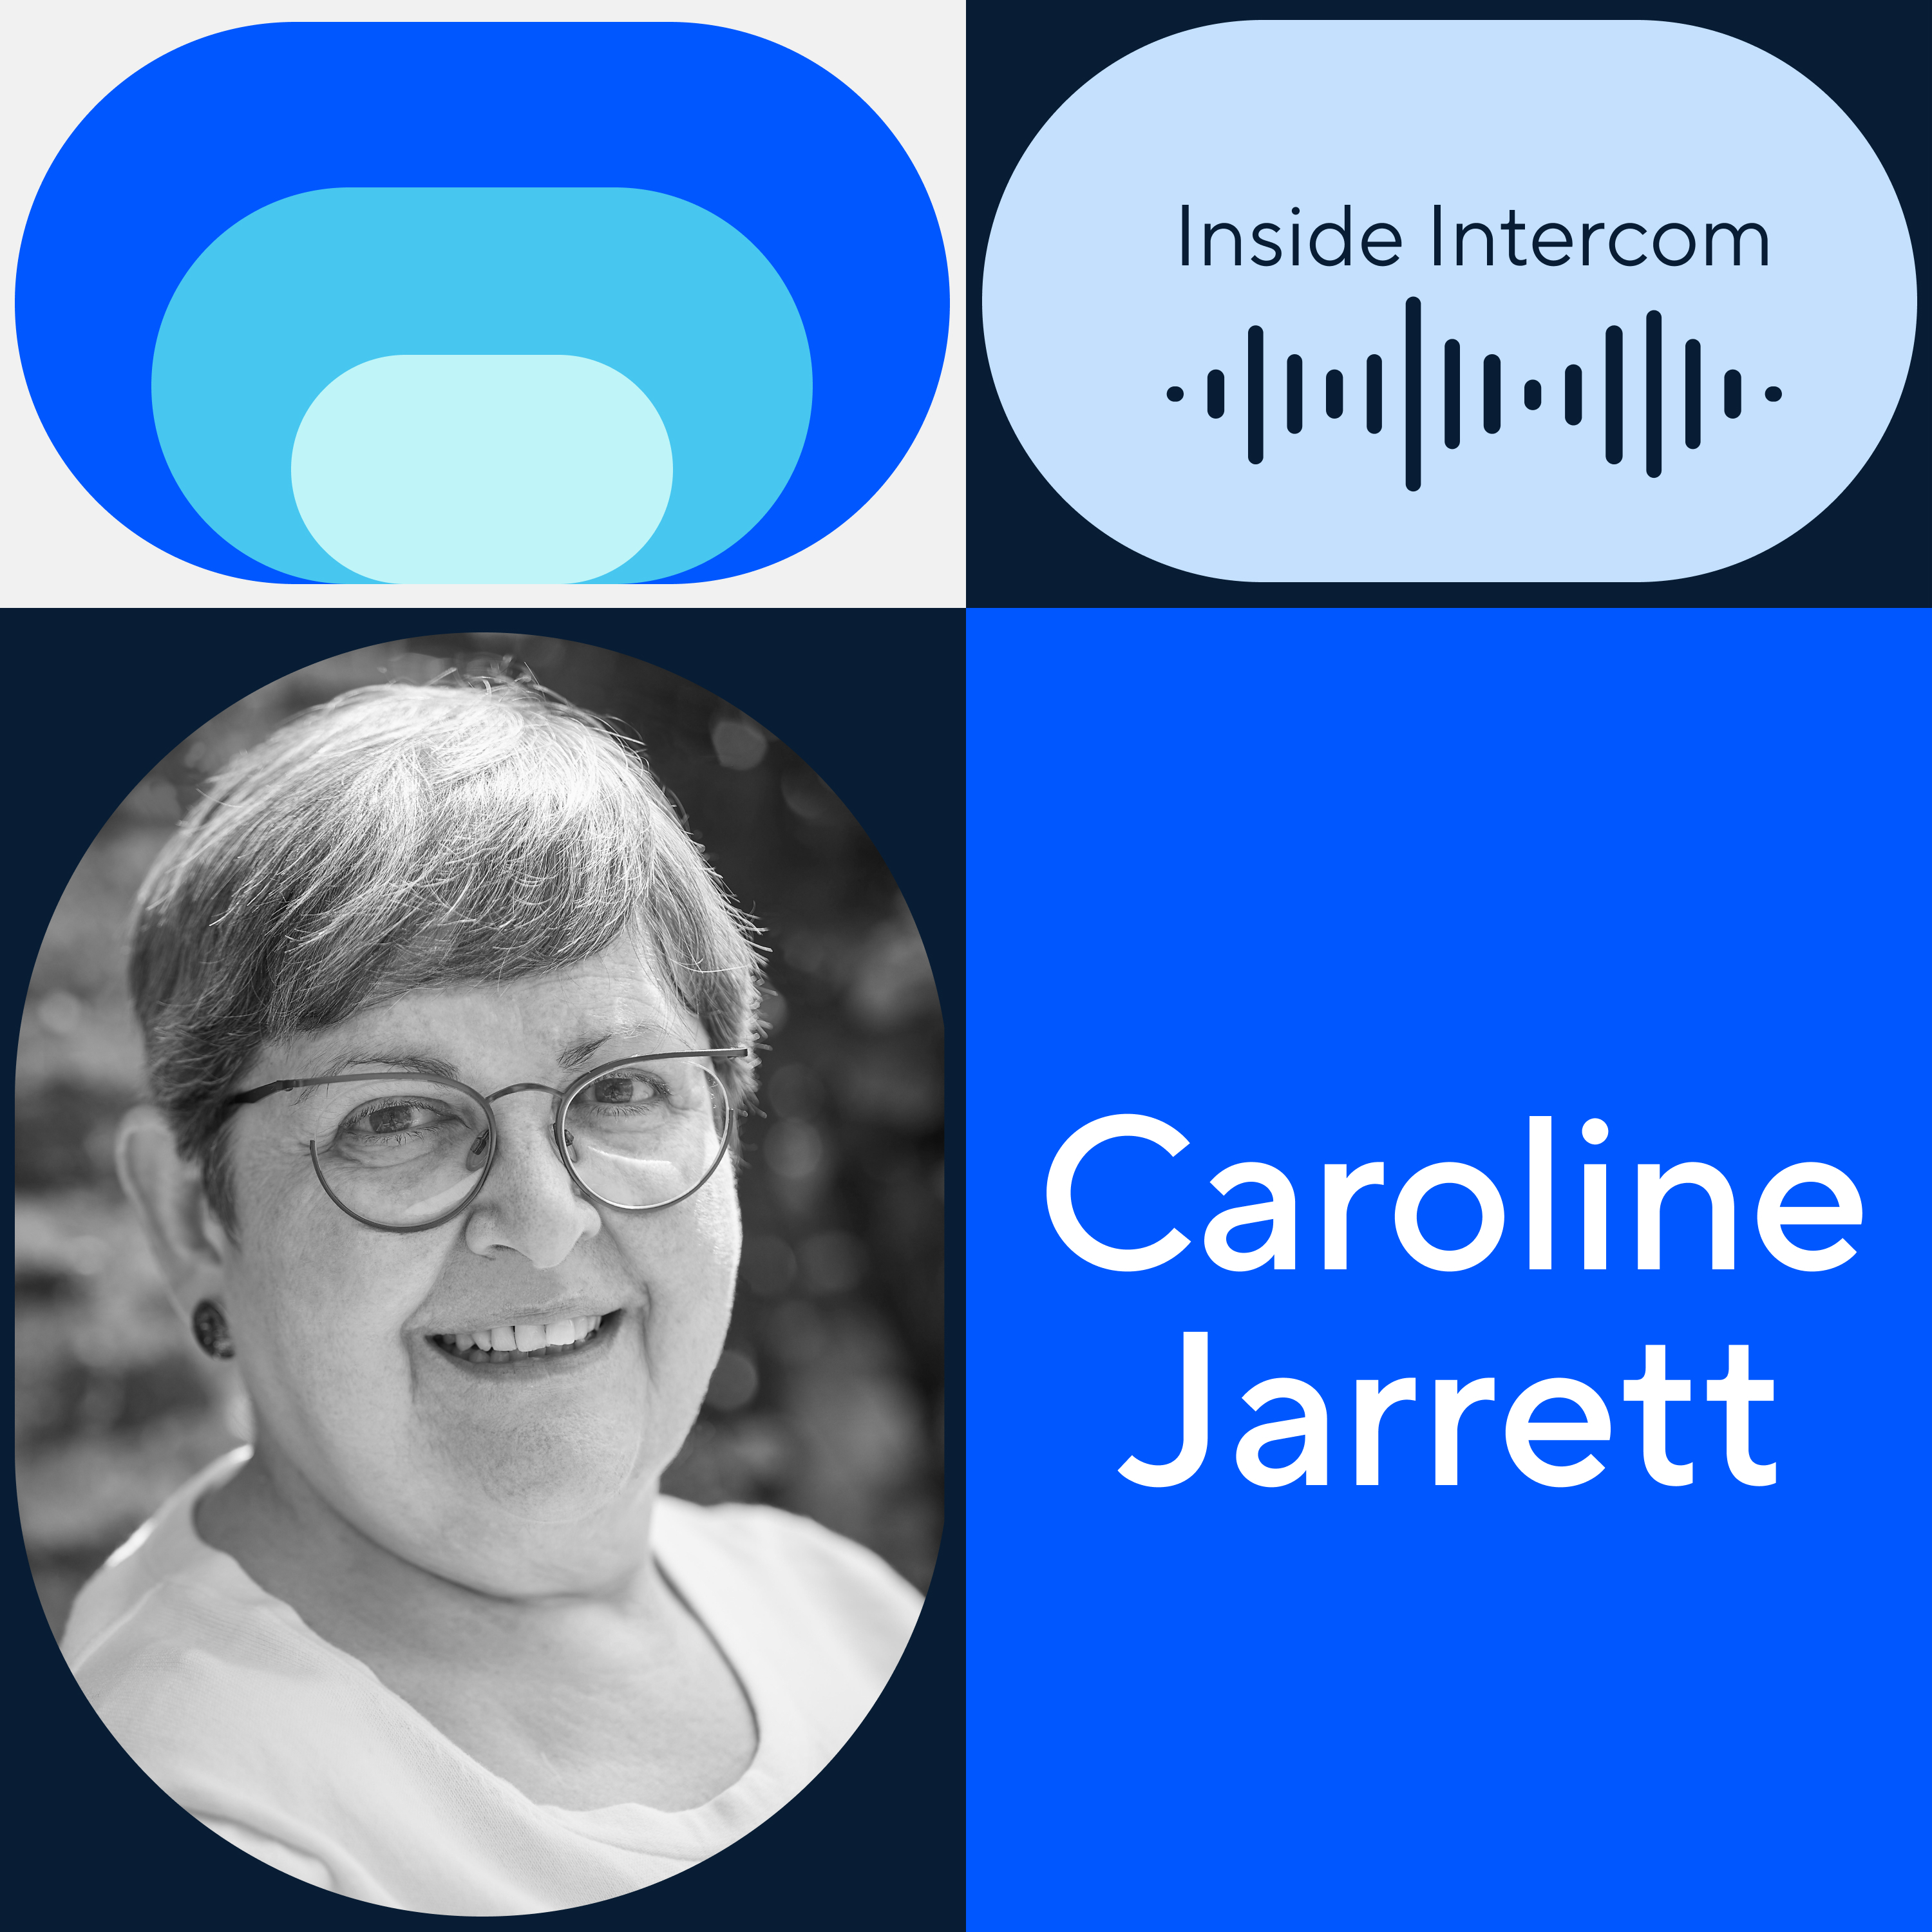 Form specialist Caroline Jarrett on designing surveys that work